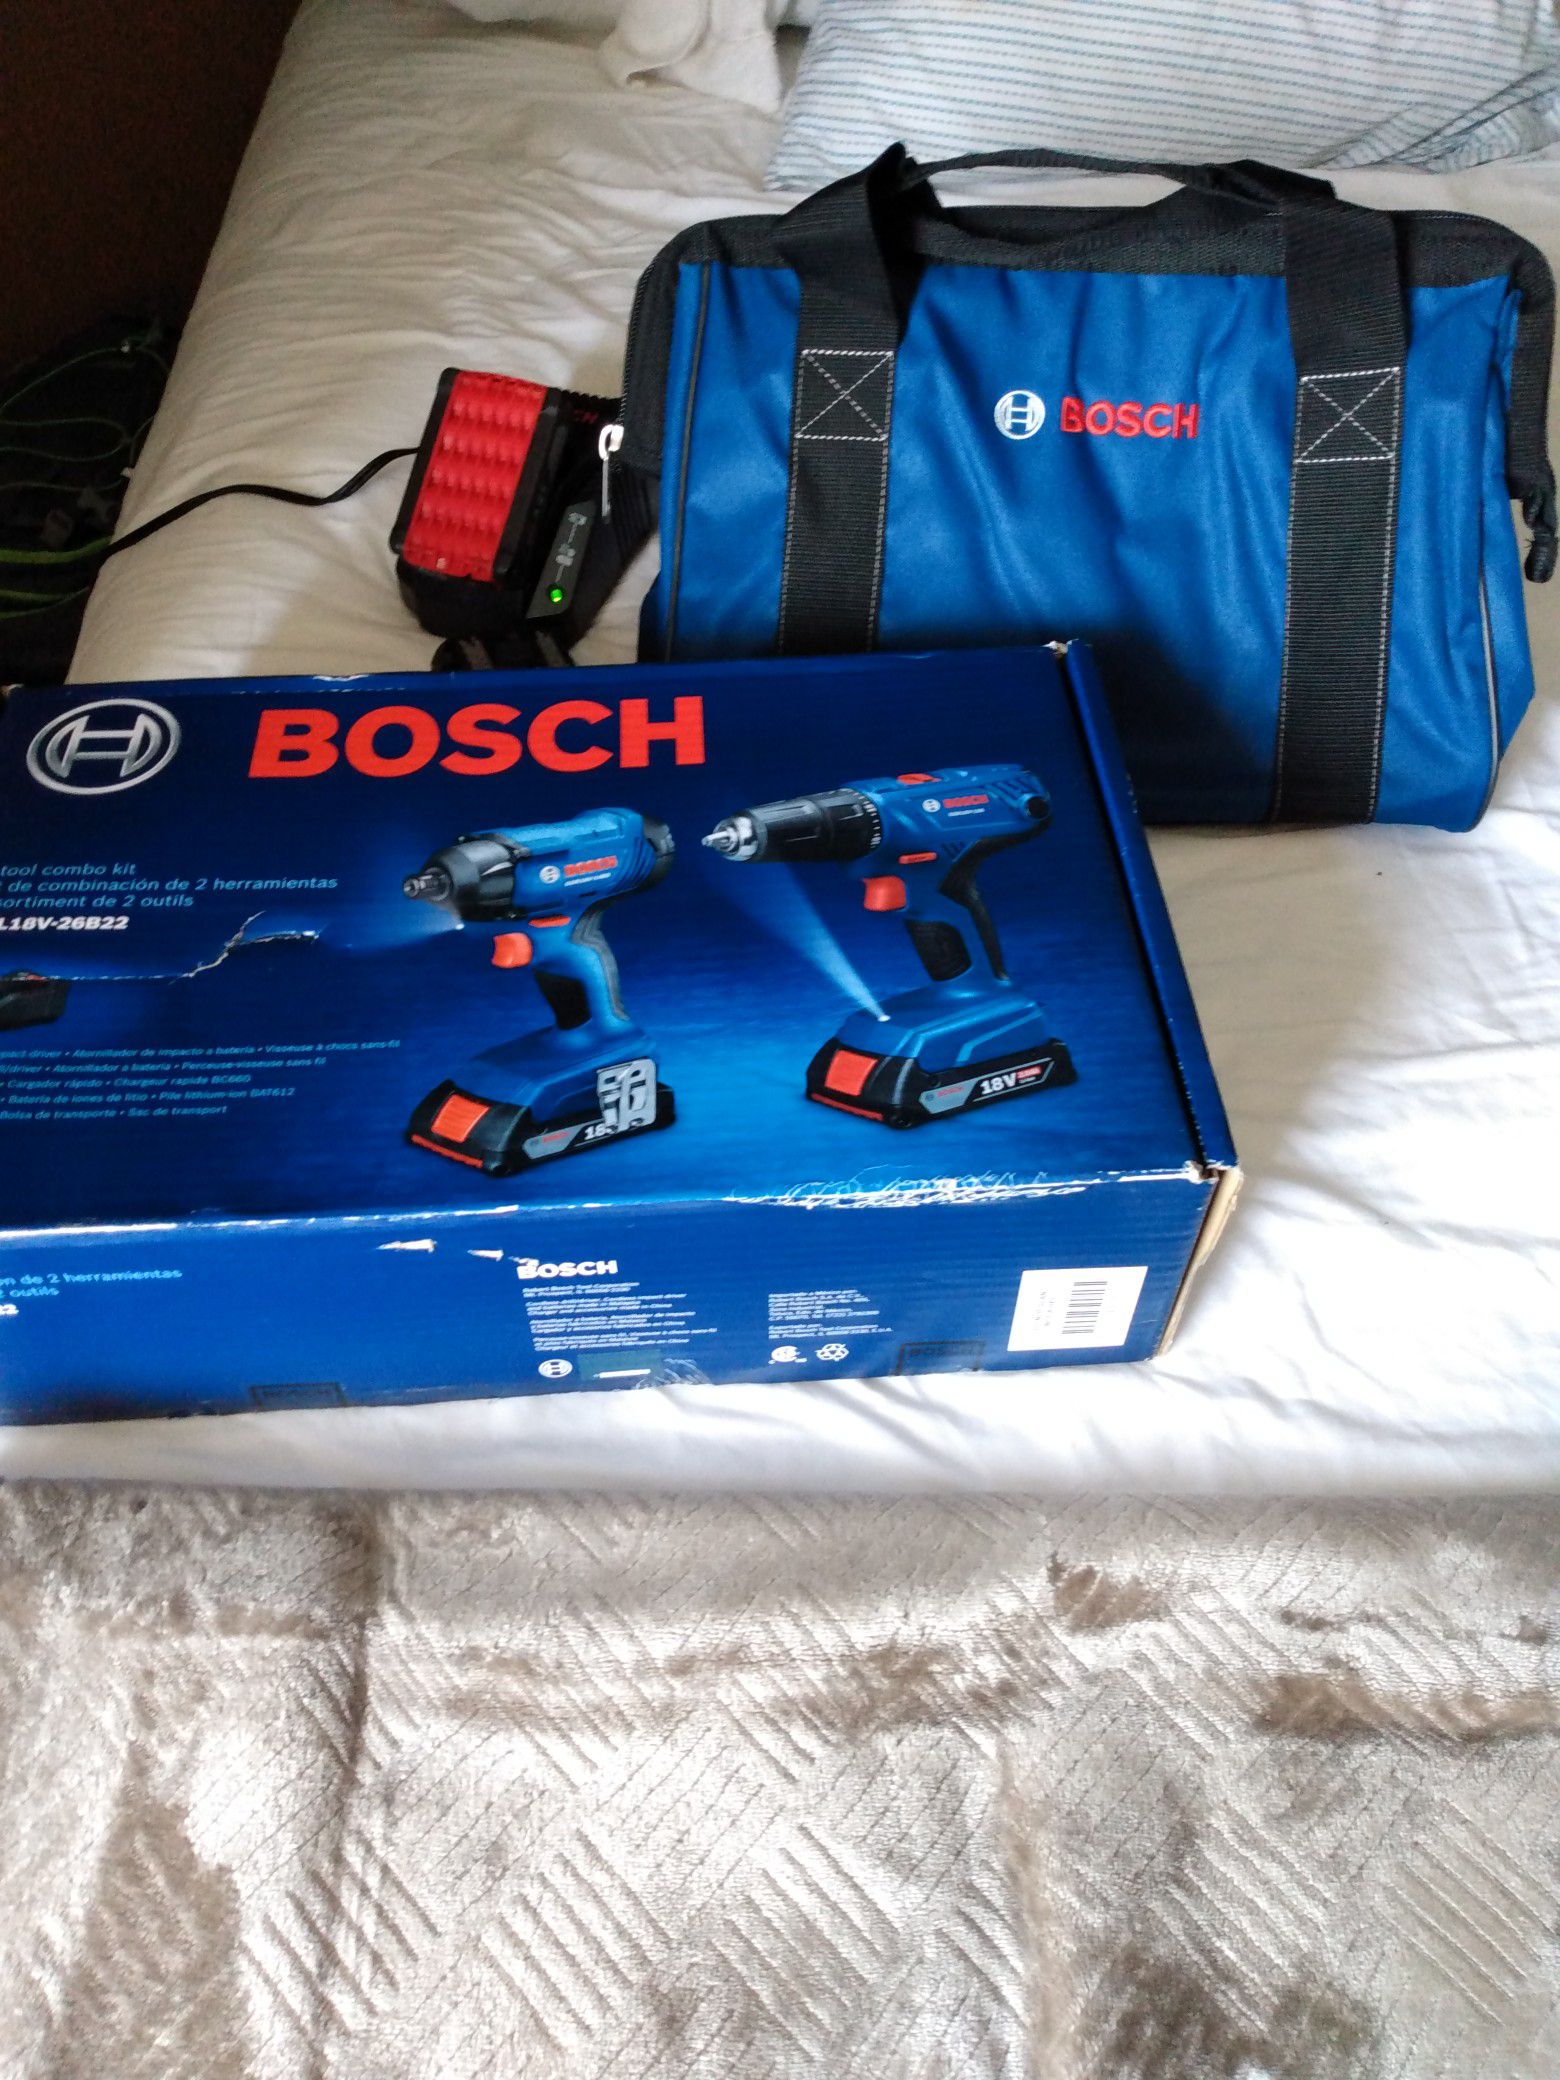 Bosch tool set